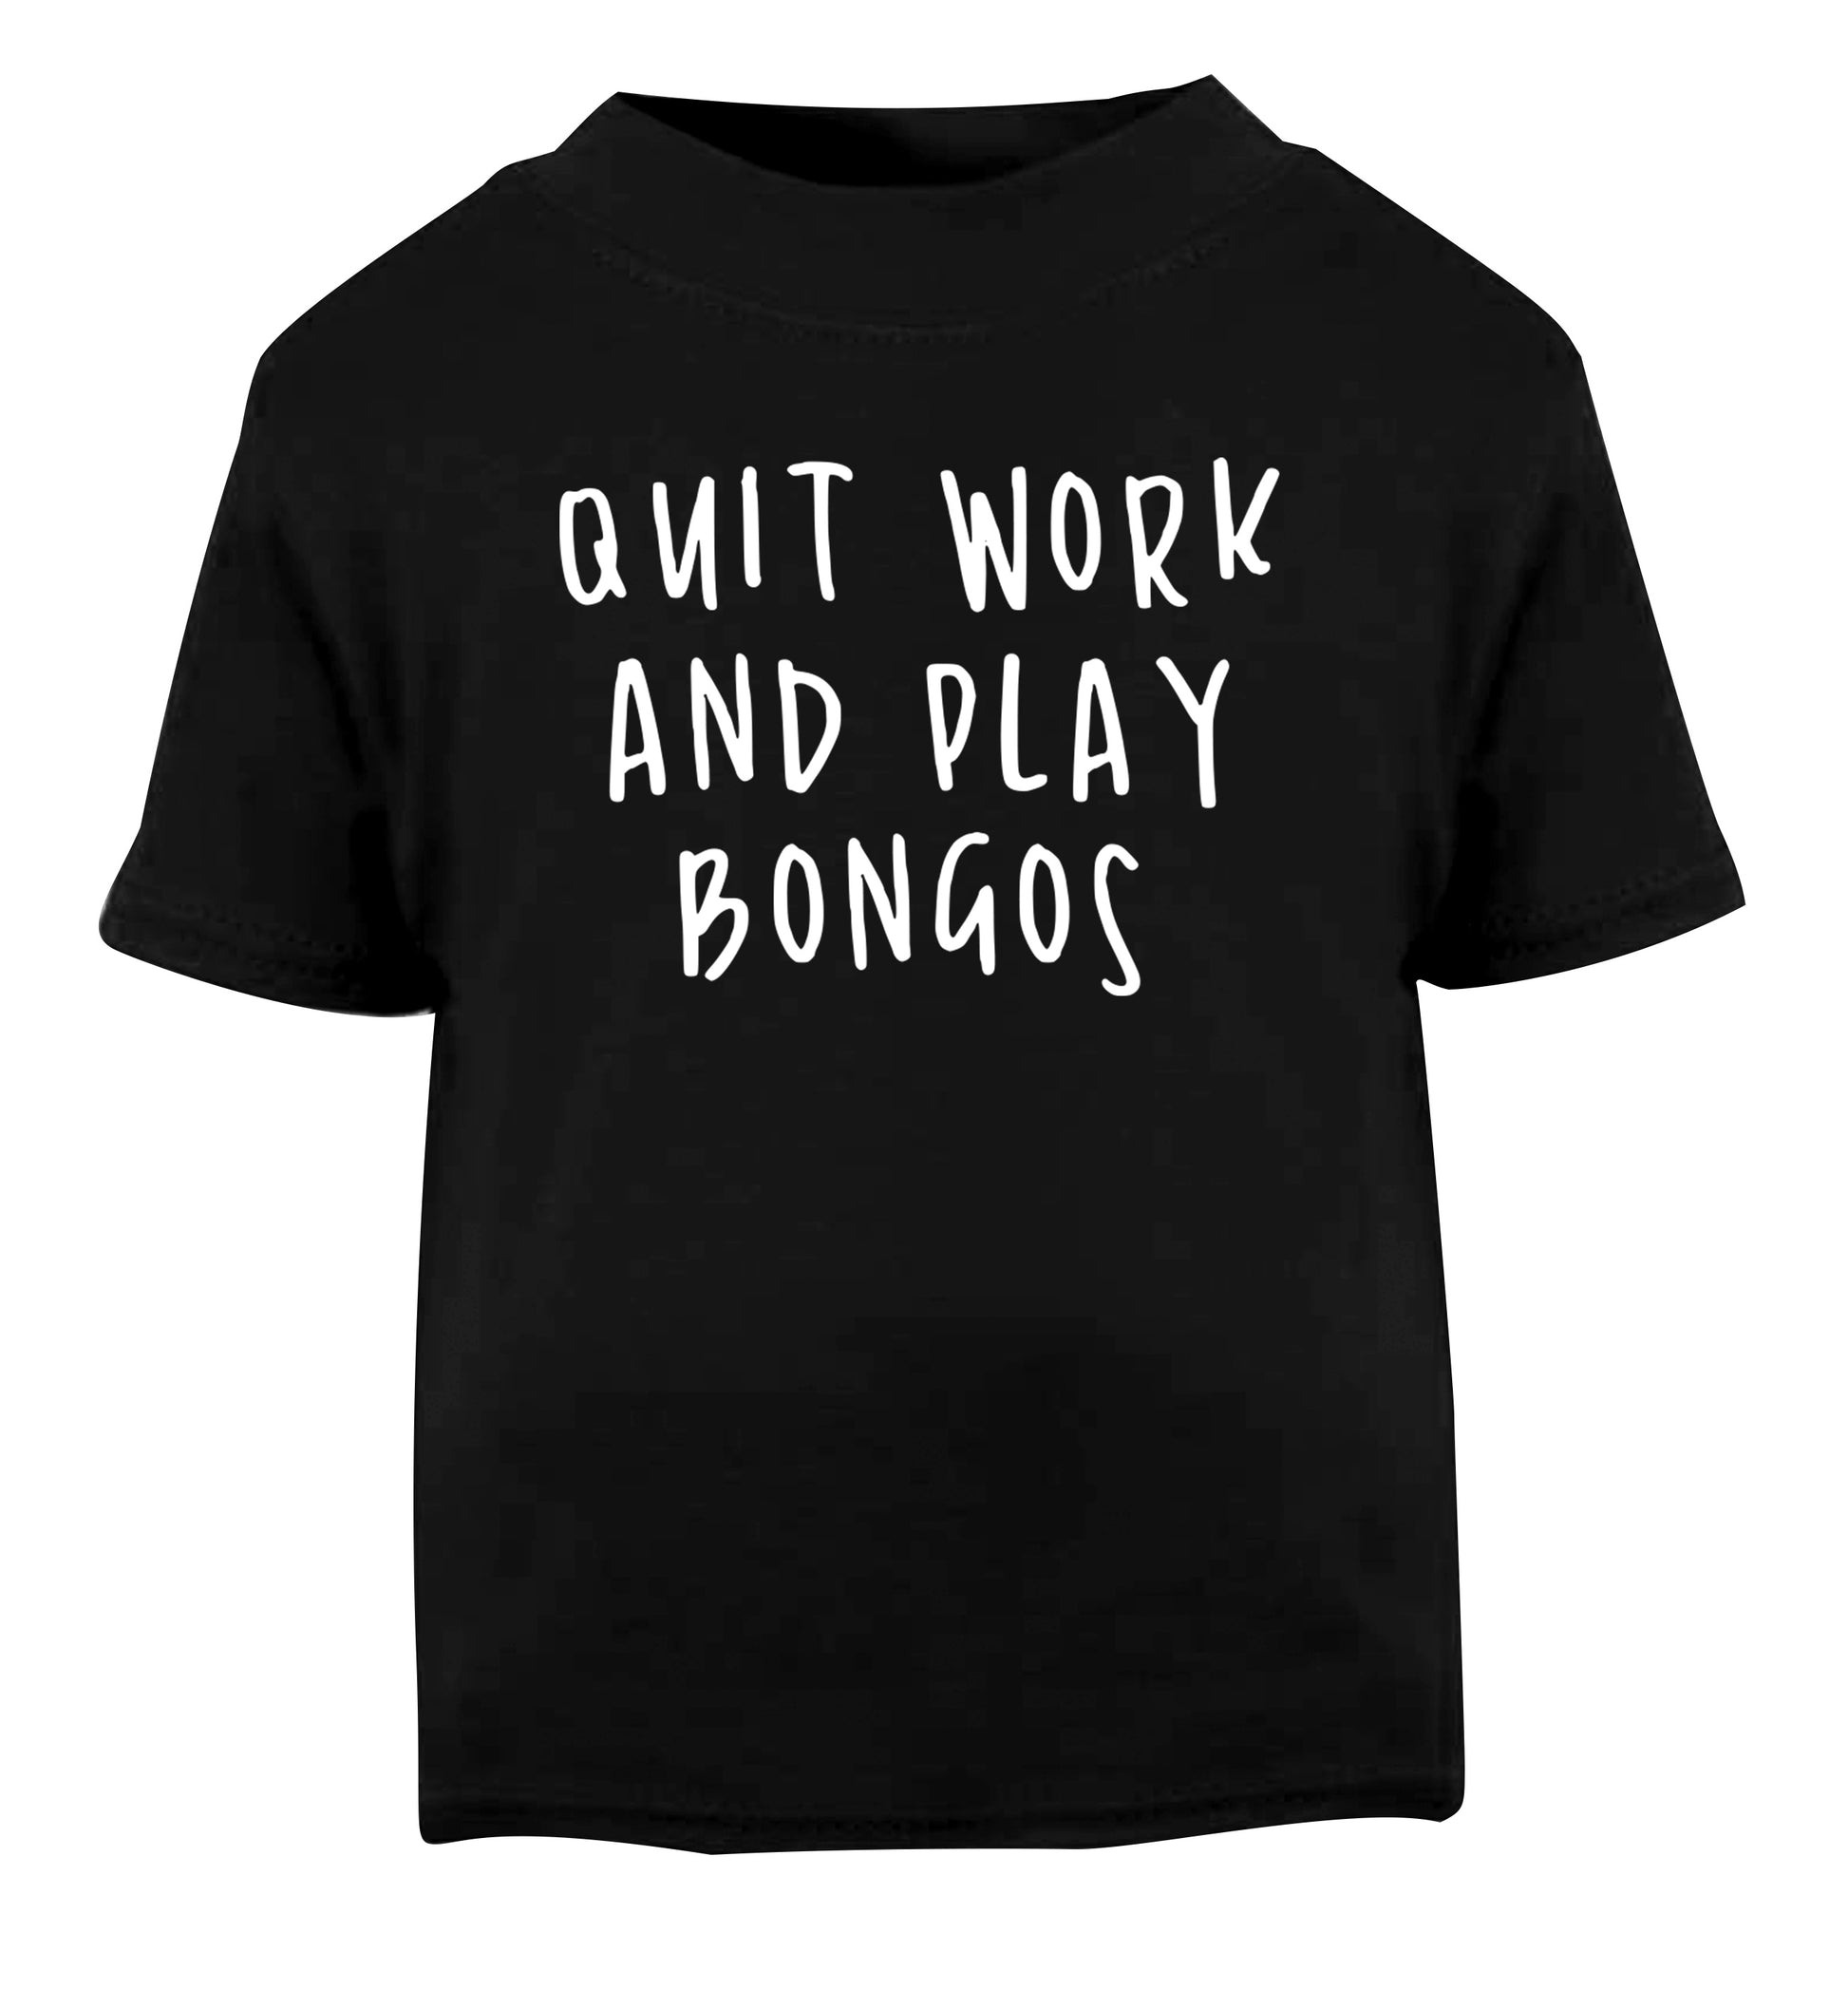 Quit work and play bongos Black Baby Toddler Tshirt 2 years